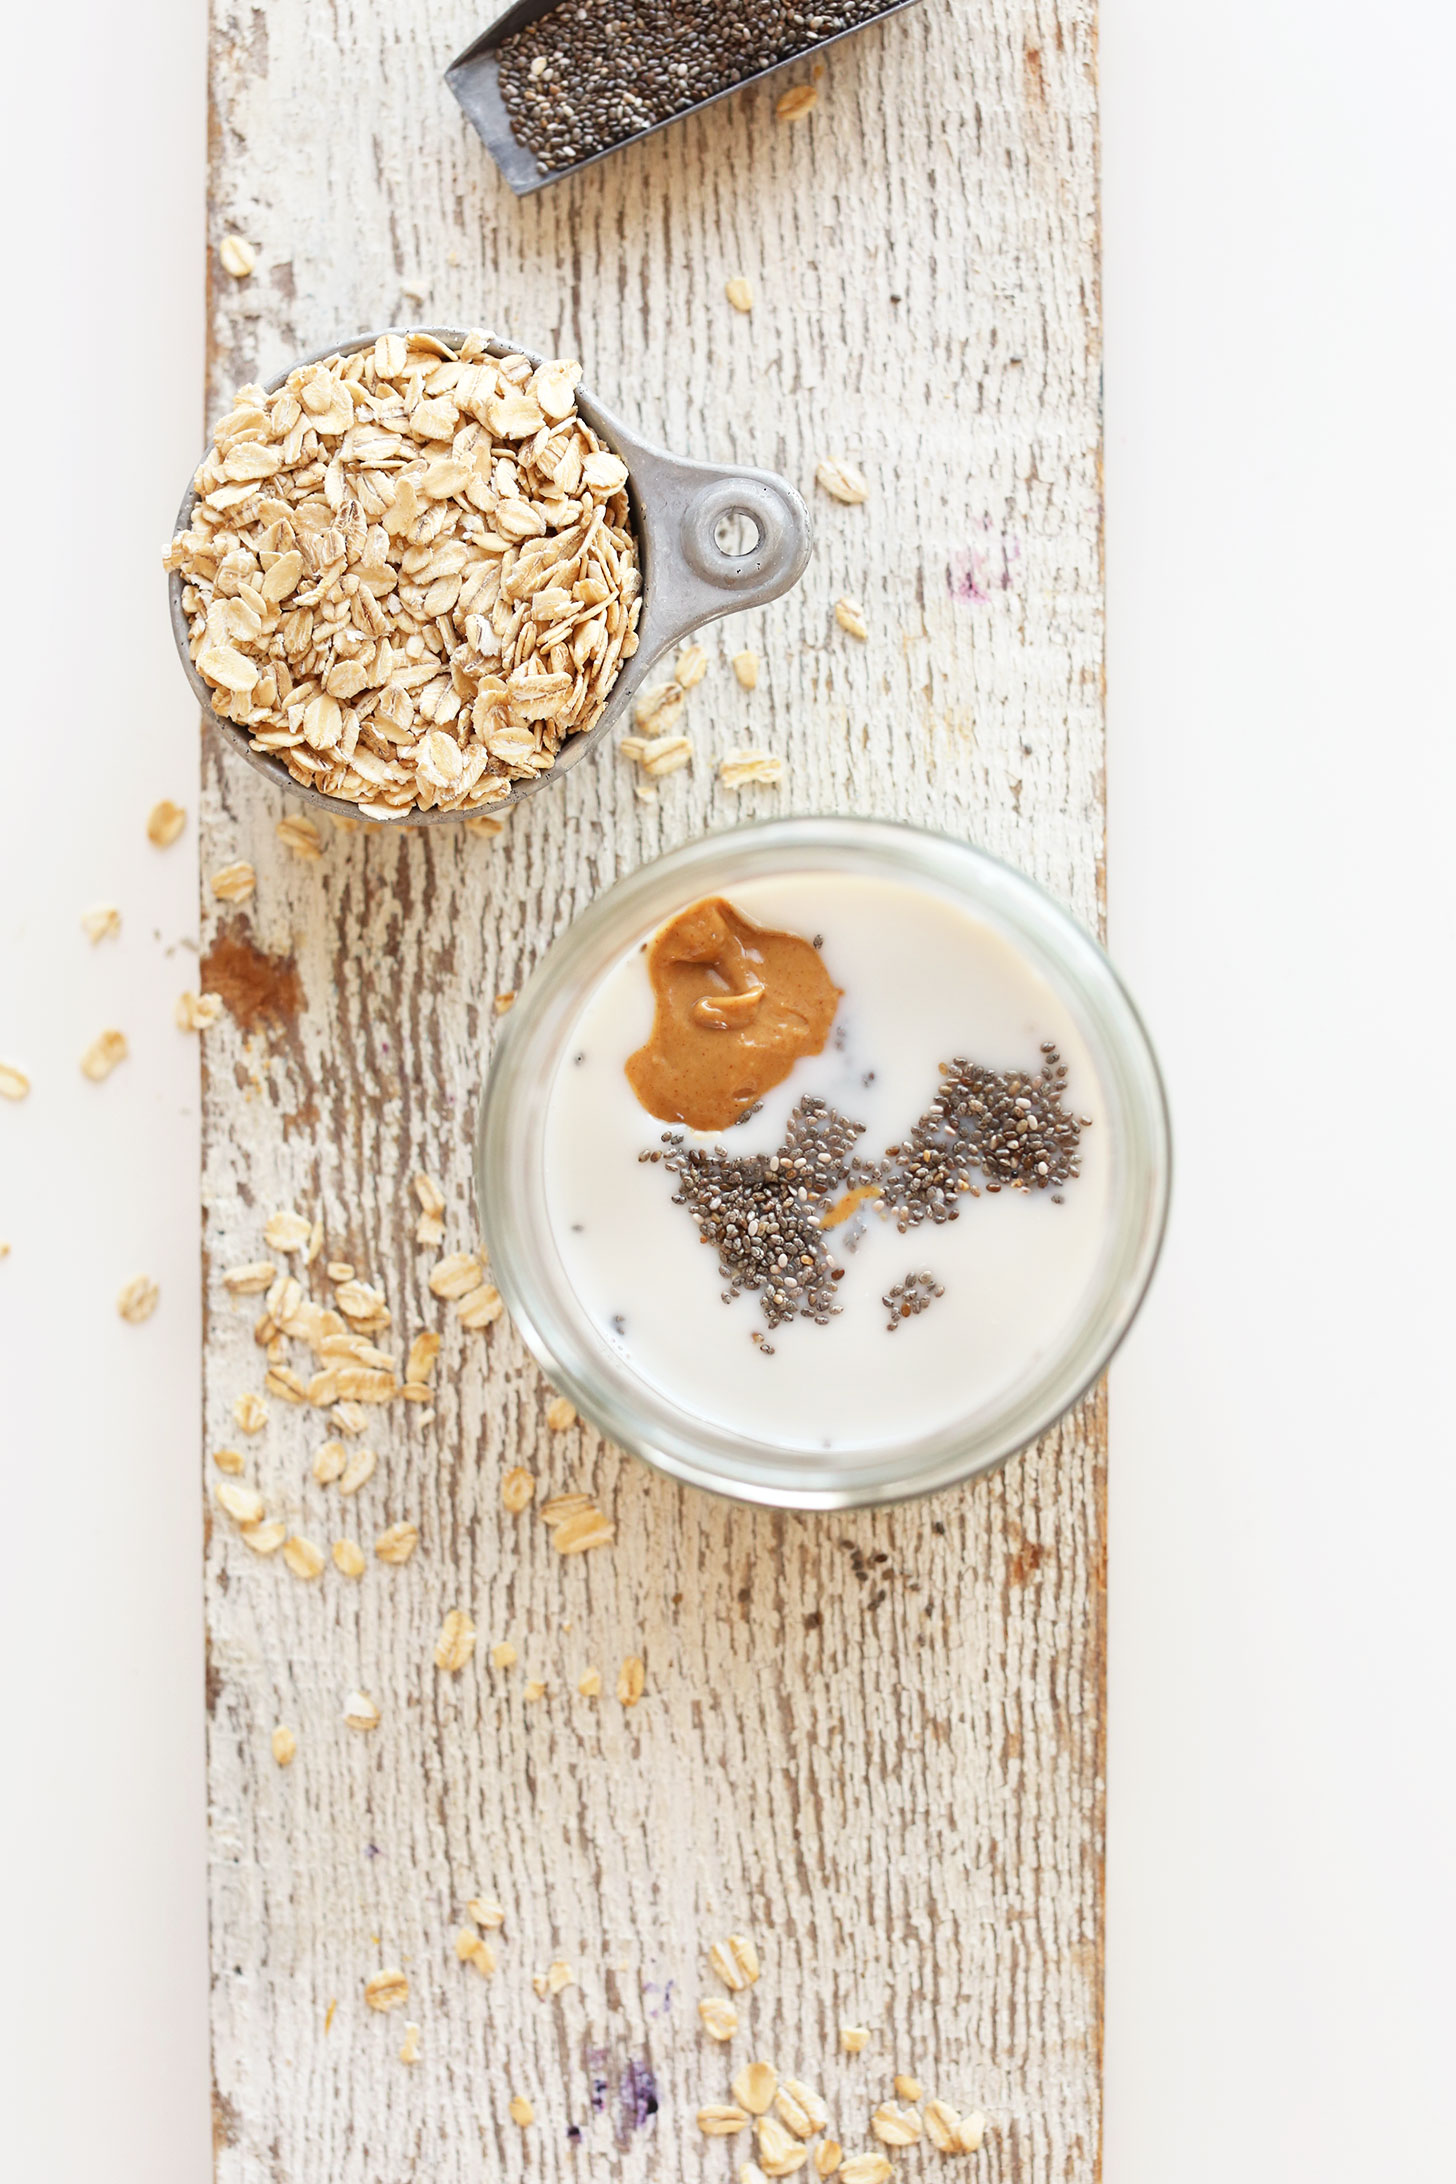 Jar of Peanut Butter Overnight Oats alongside oats and chia seeds for a fiber-rich vegan breakfast